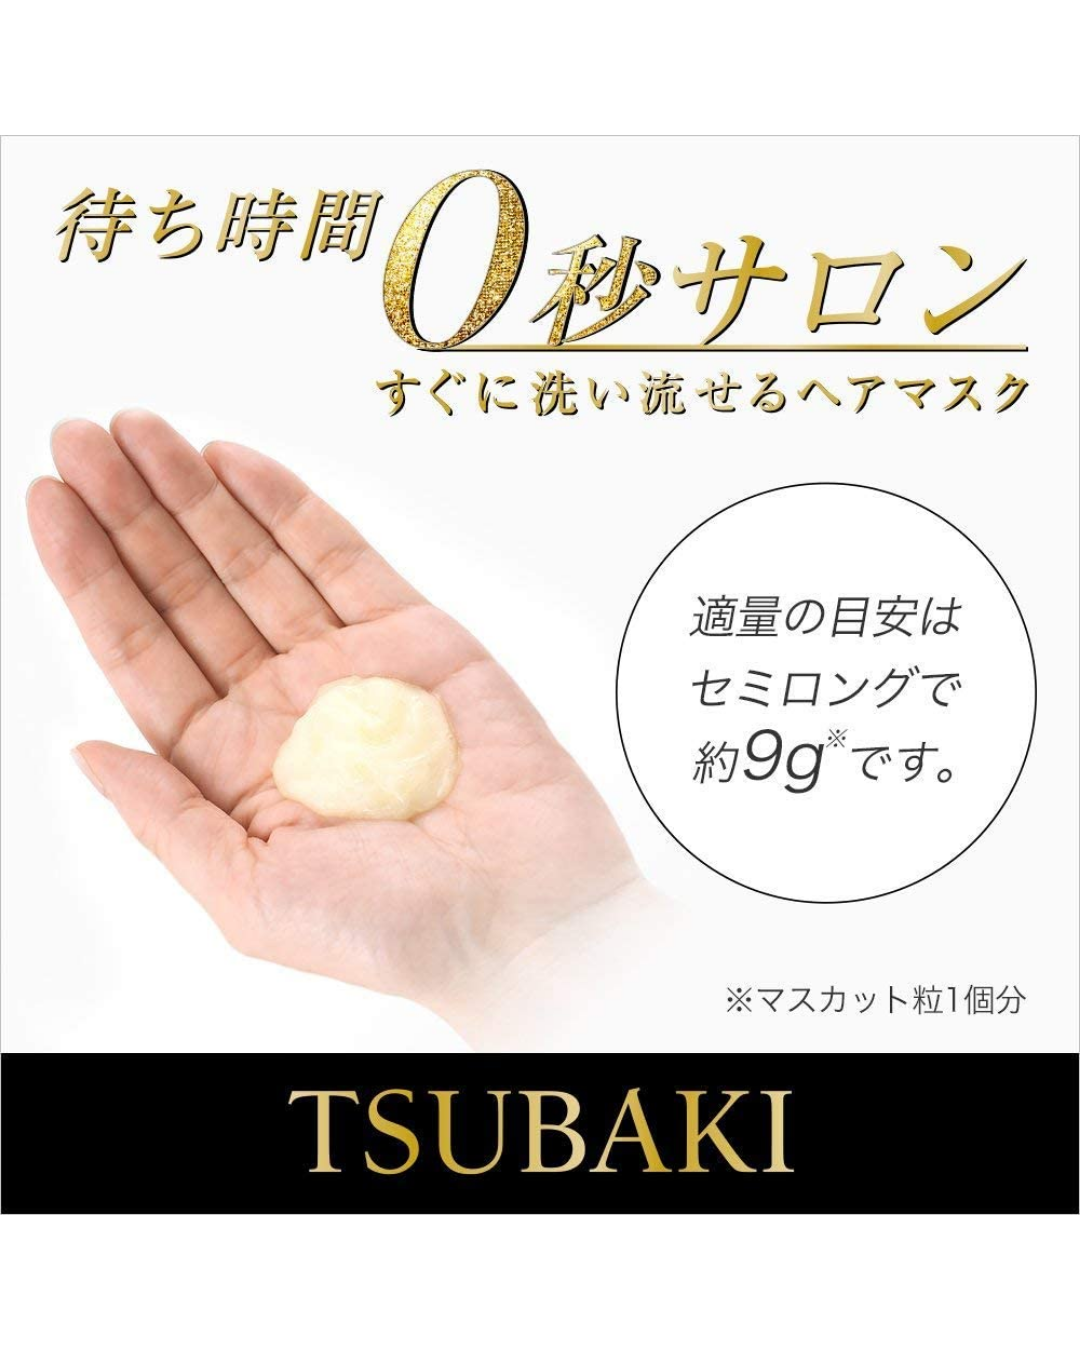 Shiseido Tsubaki Premium Repair Hair Mask